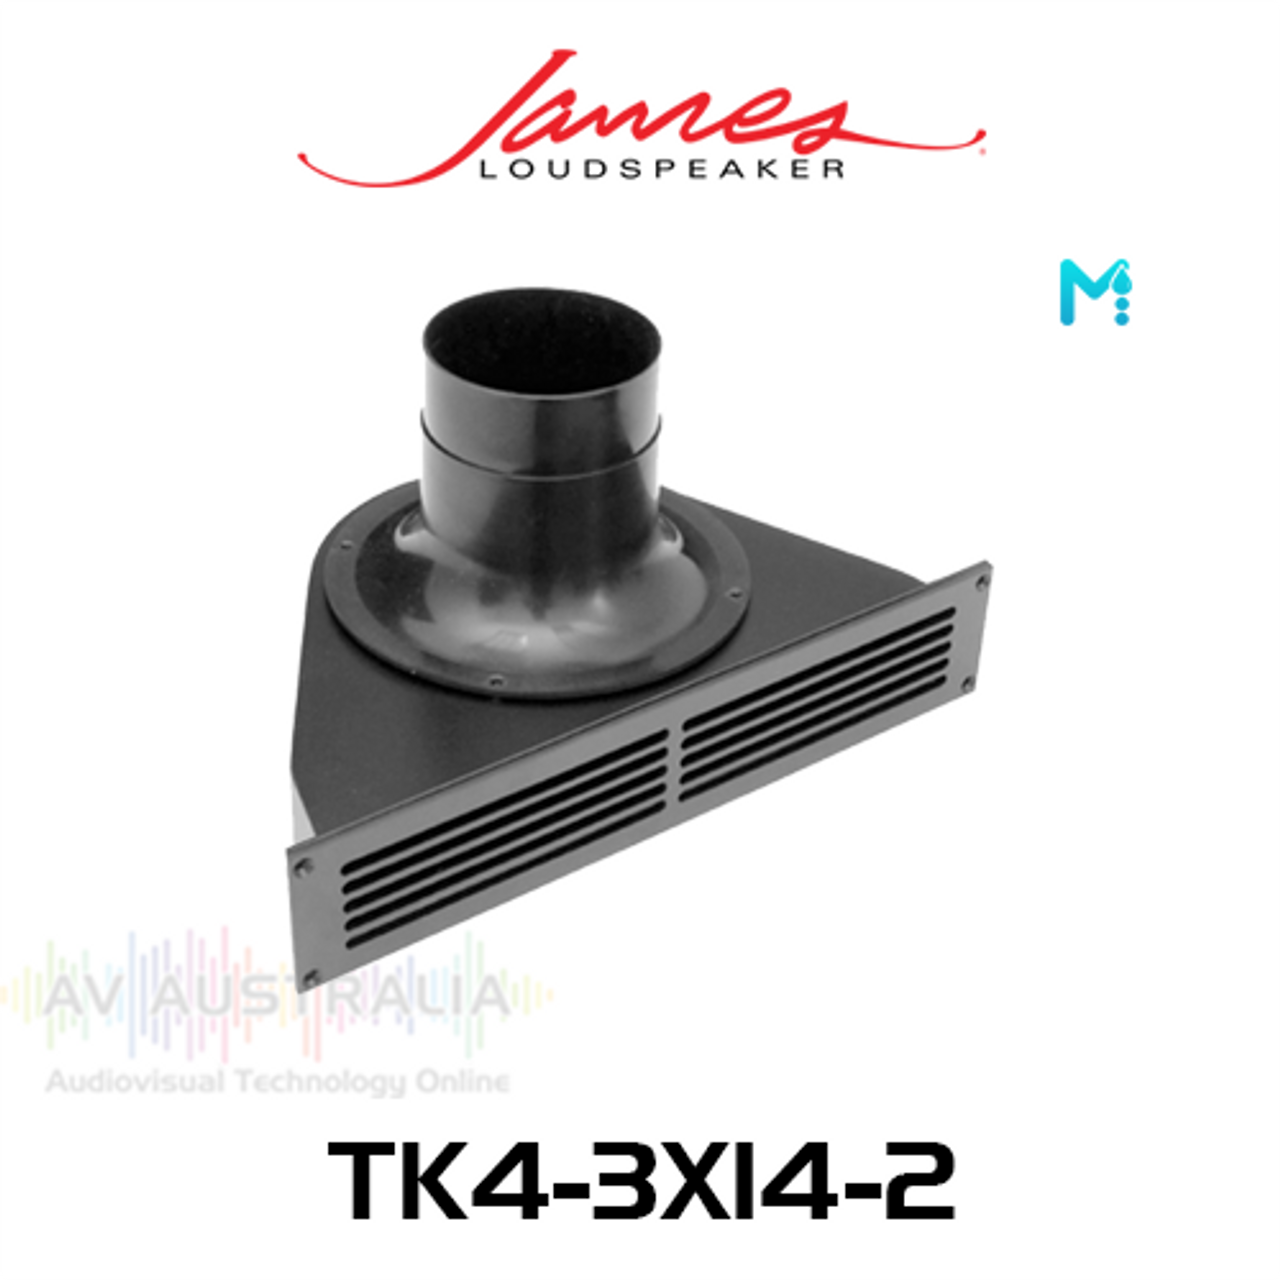 James Loudspeaker TK4-3X14-2 3" x 14" Grille Toekick For 4" Flexible Duct Tube